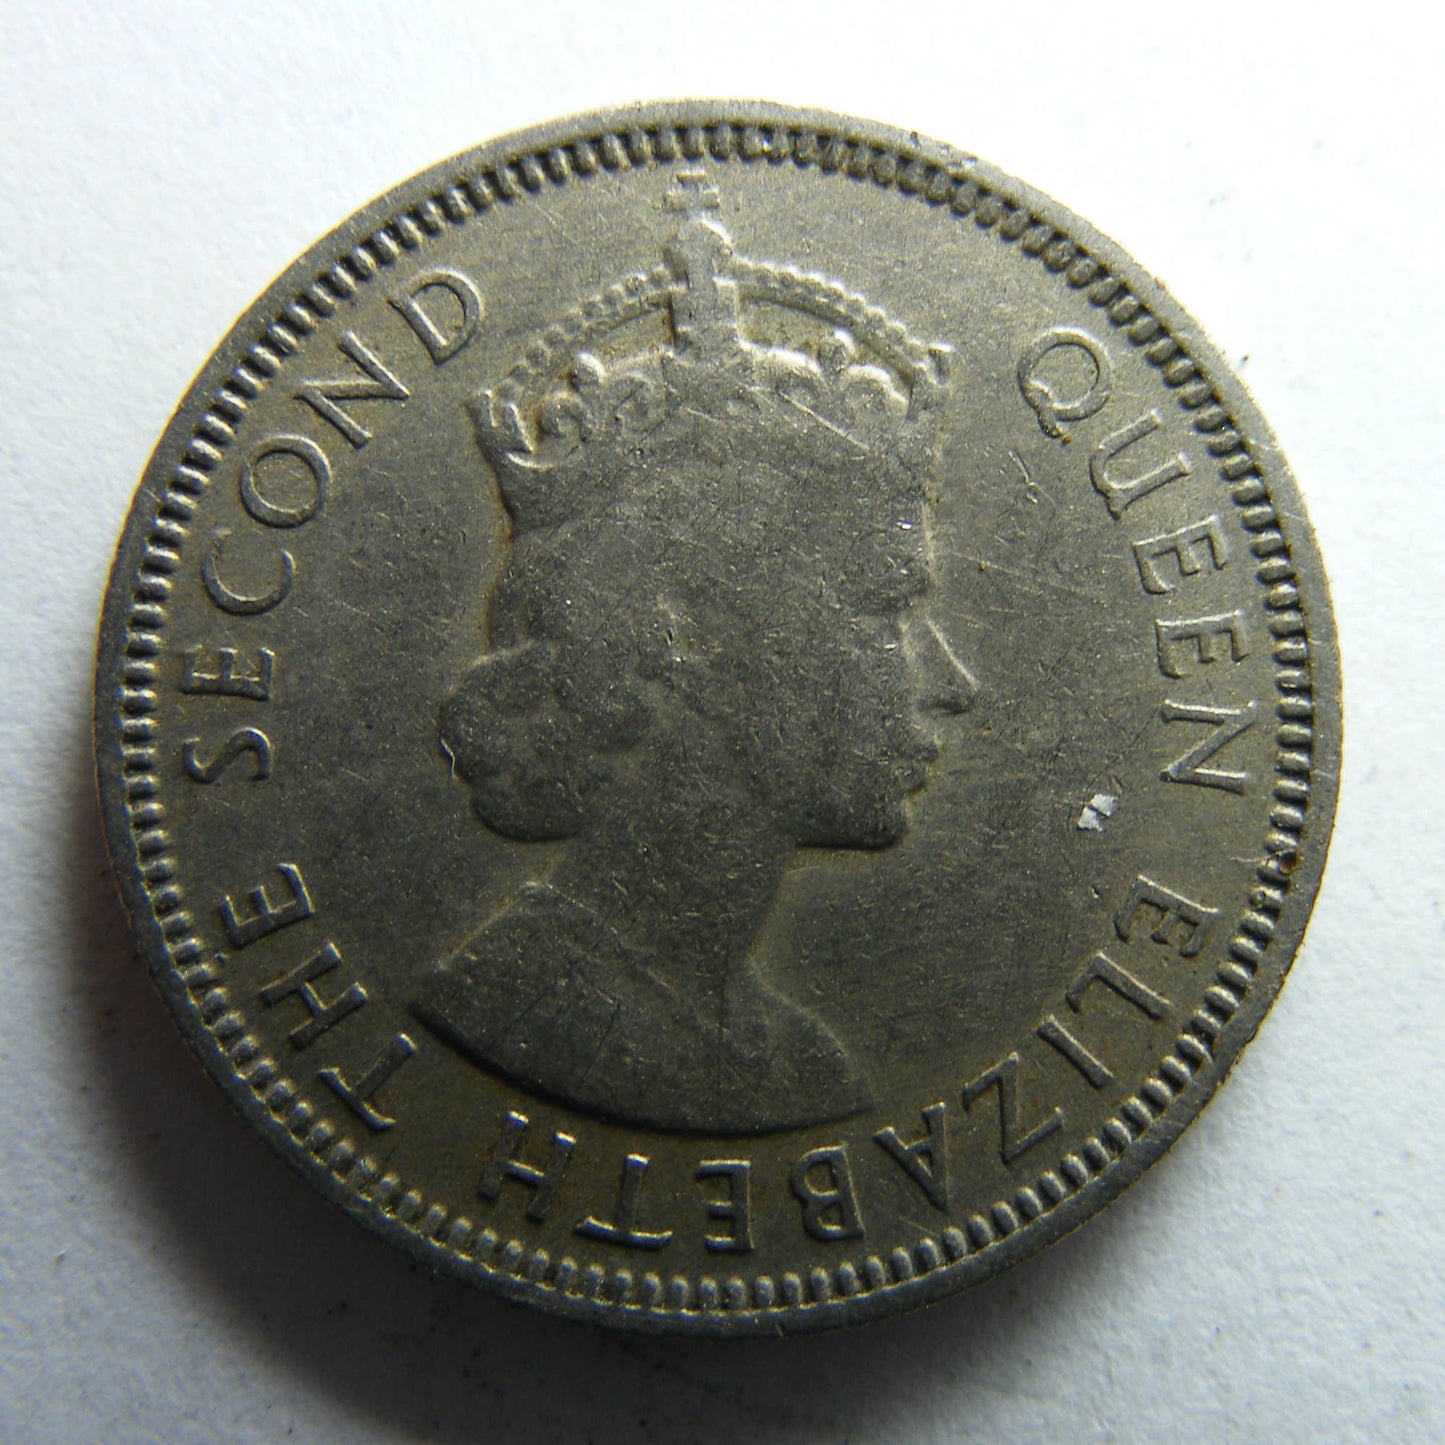 Malaya & British Borneo 1953 Ten Cent Queen Elizabeth II Coin